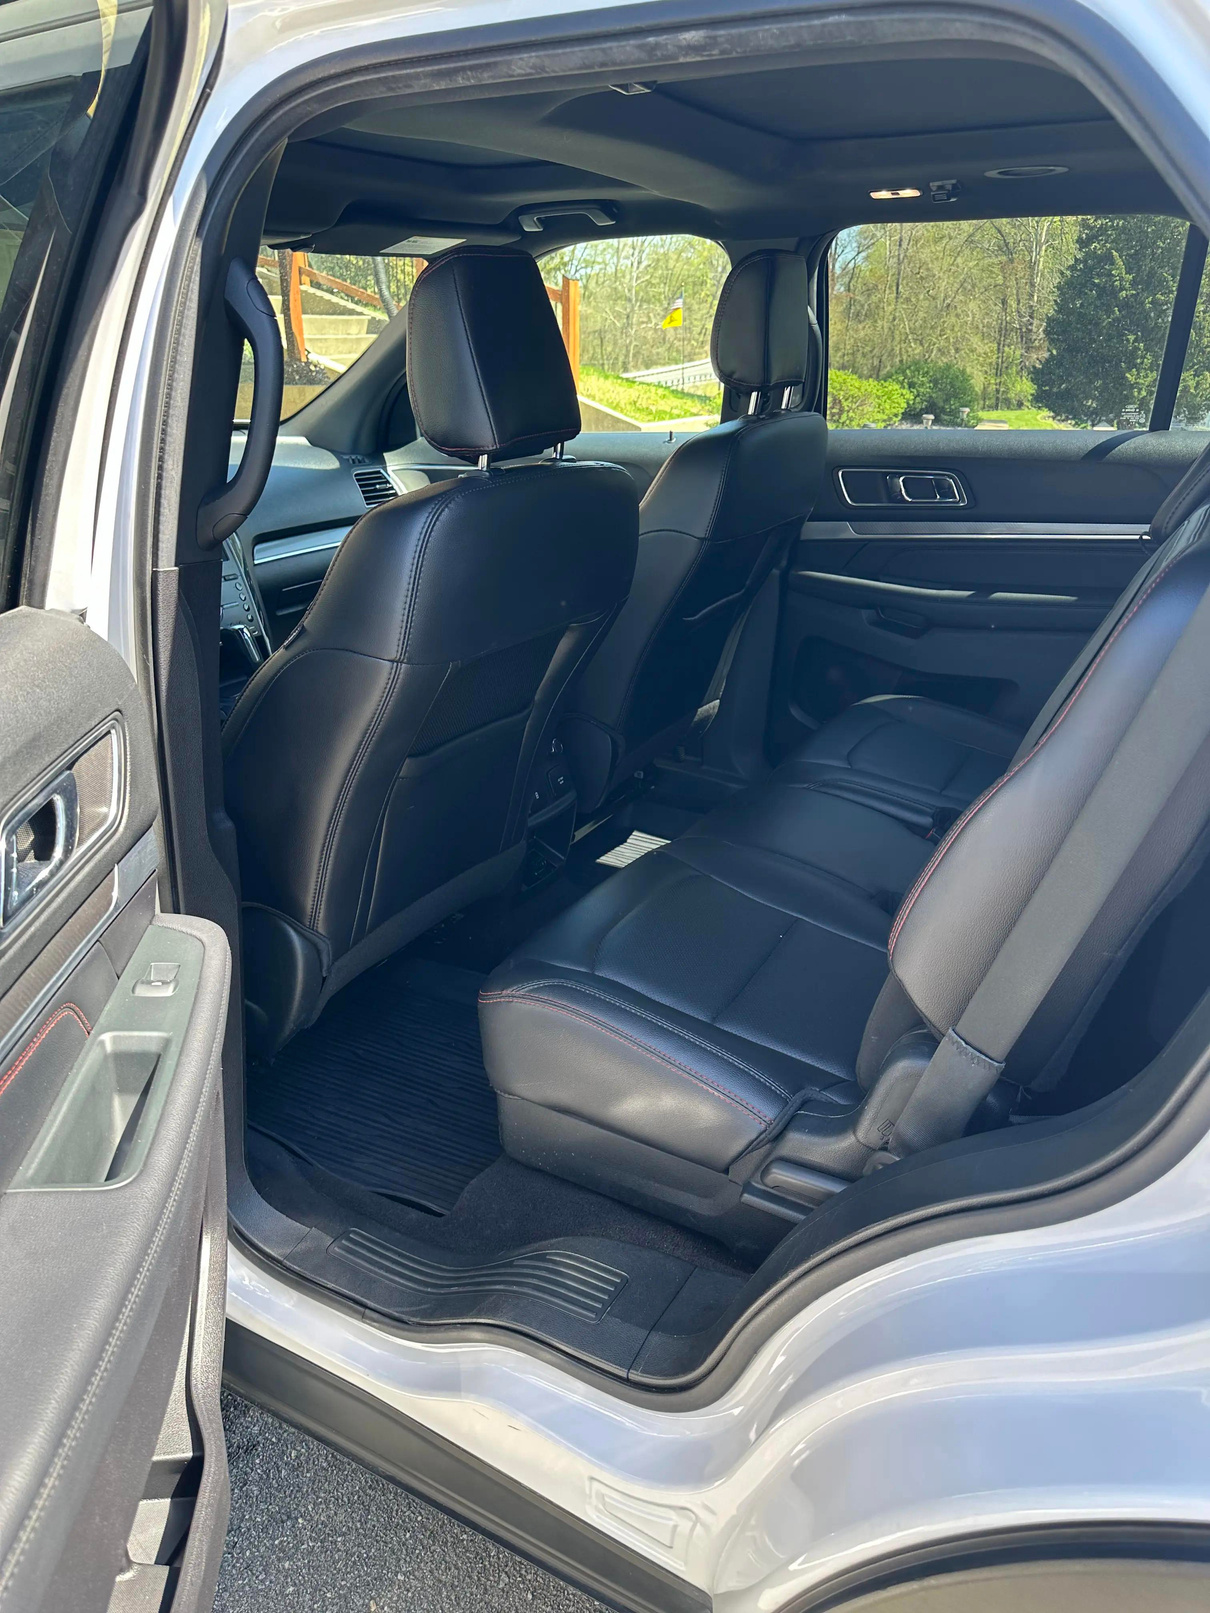 This Ford Explorer received a premium interior detail.